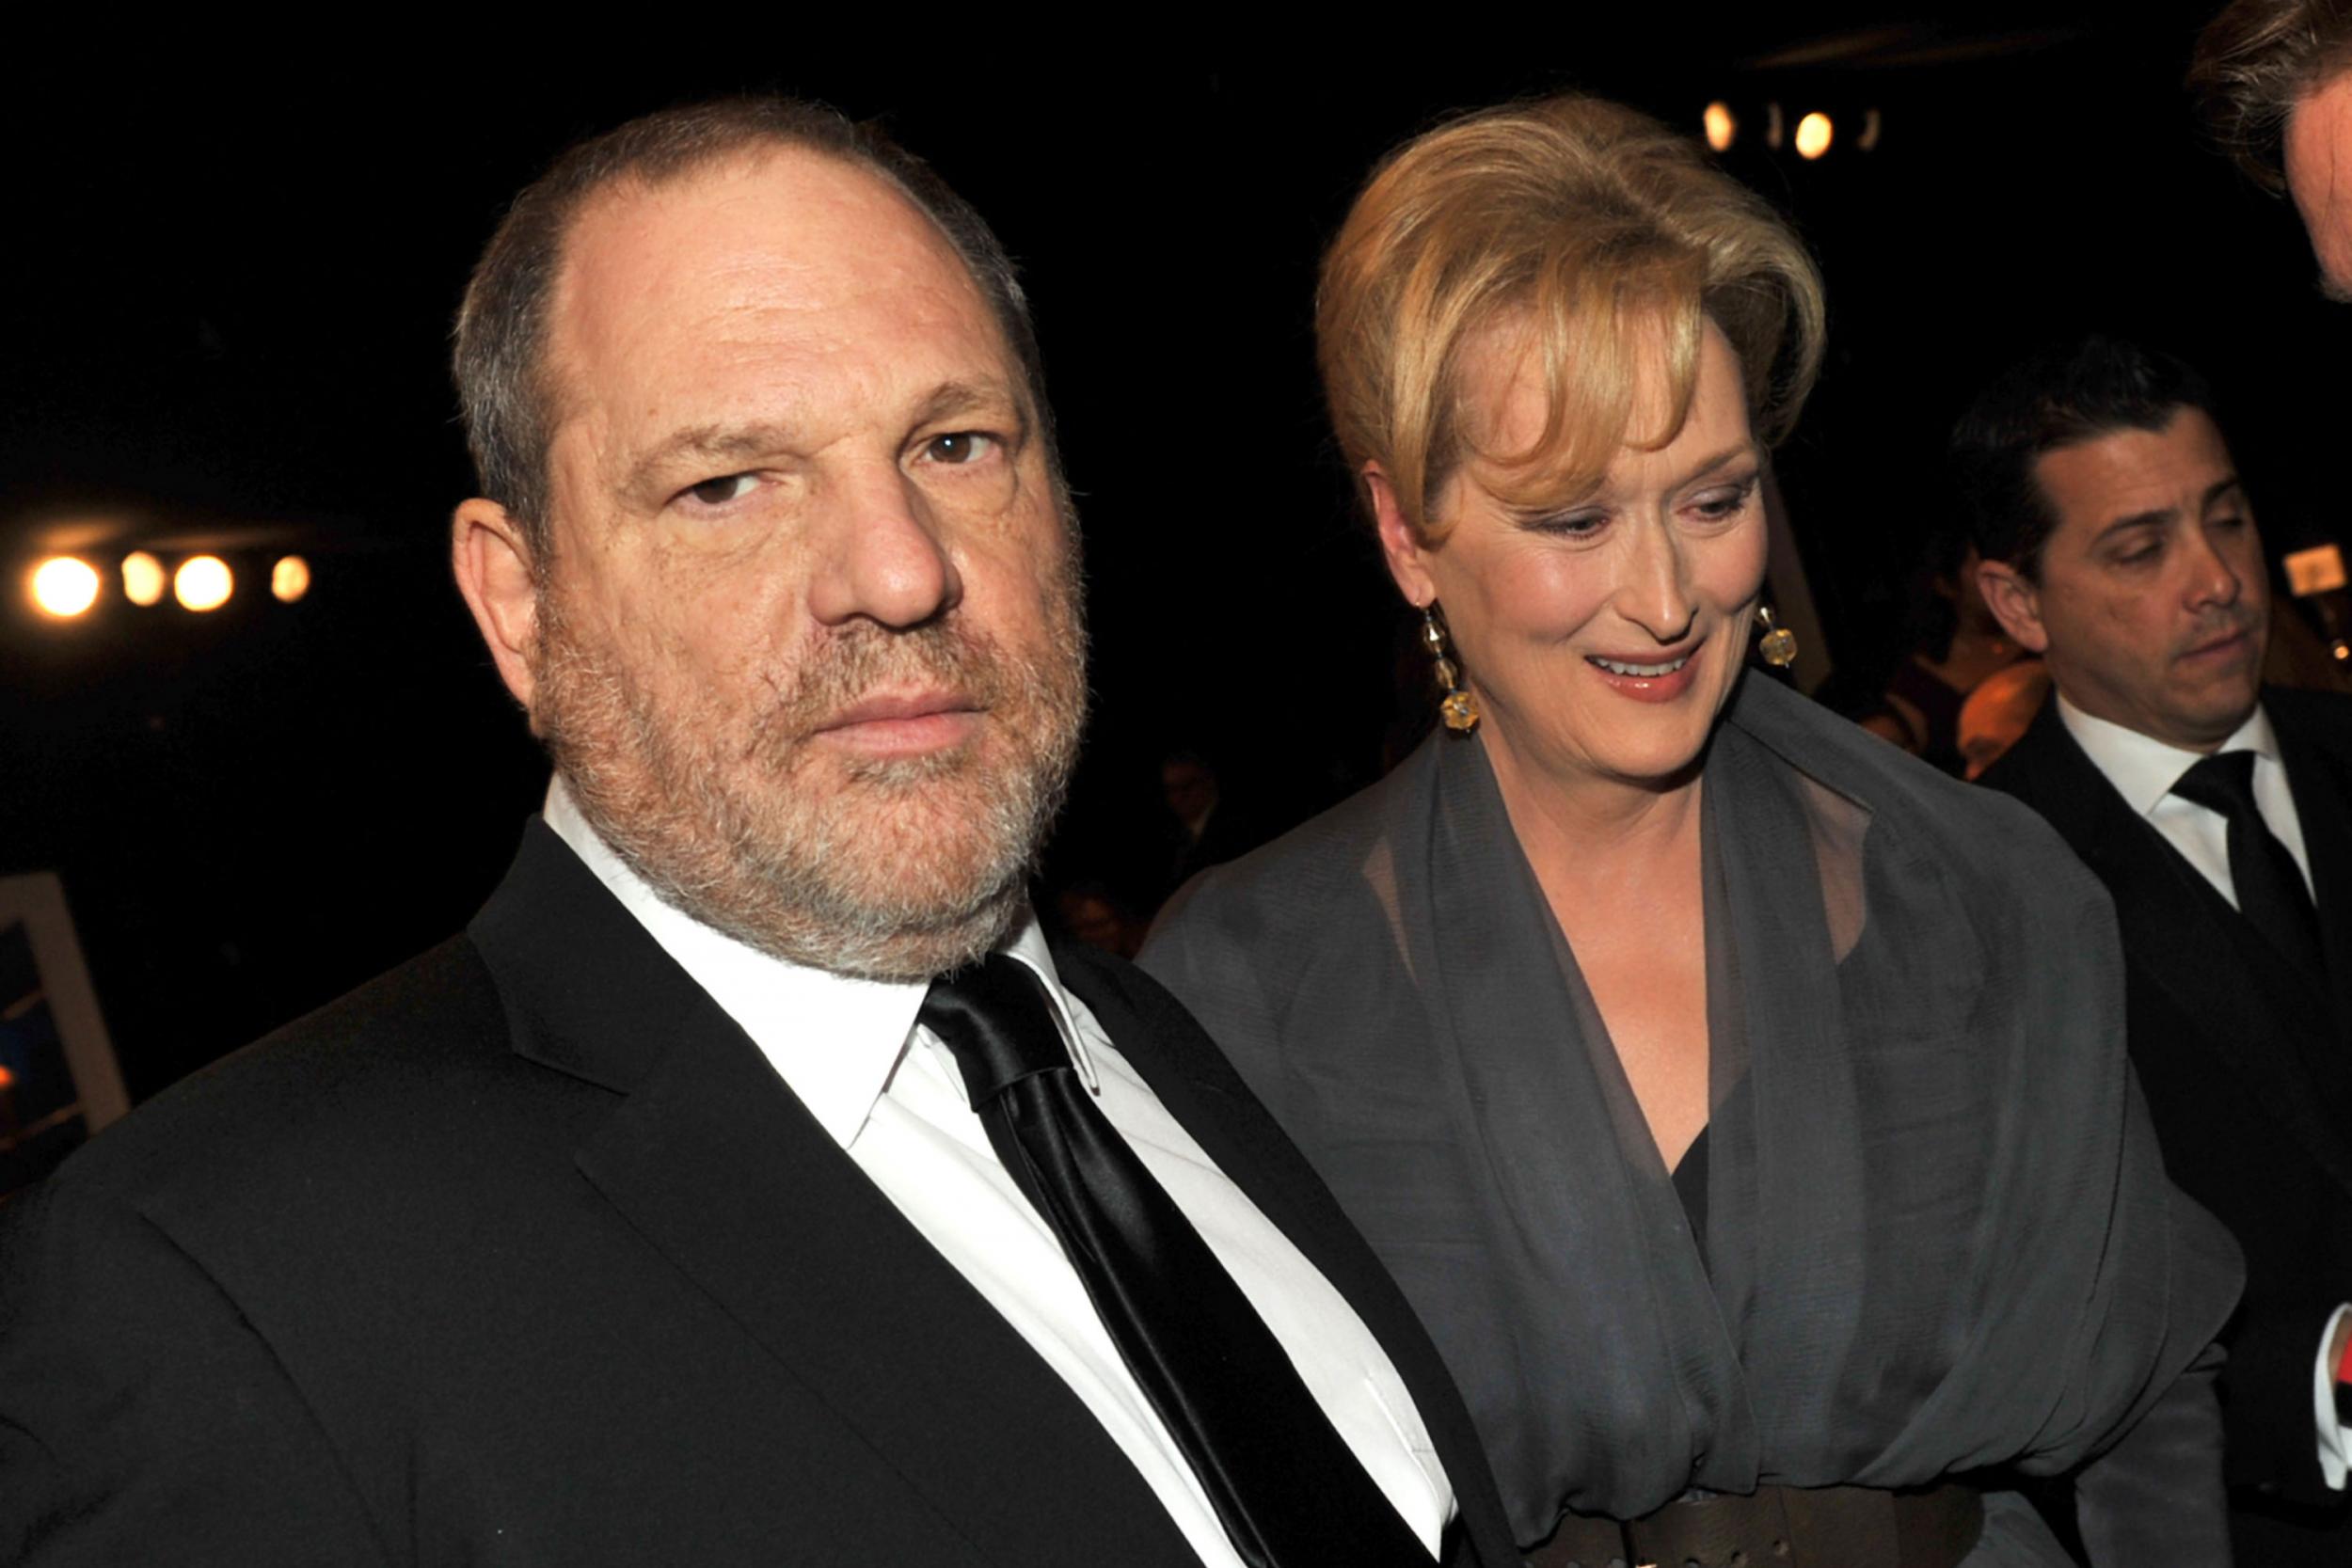 Harvey Weinstein with Meryl Streep in 2012 (